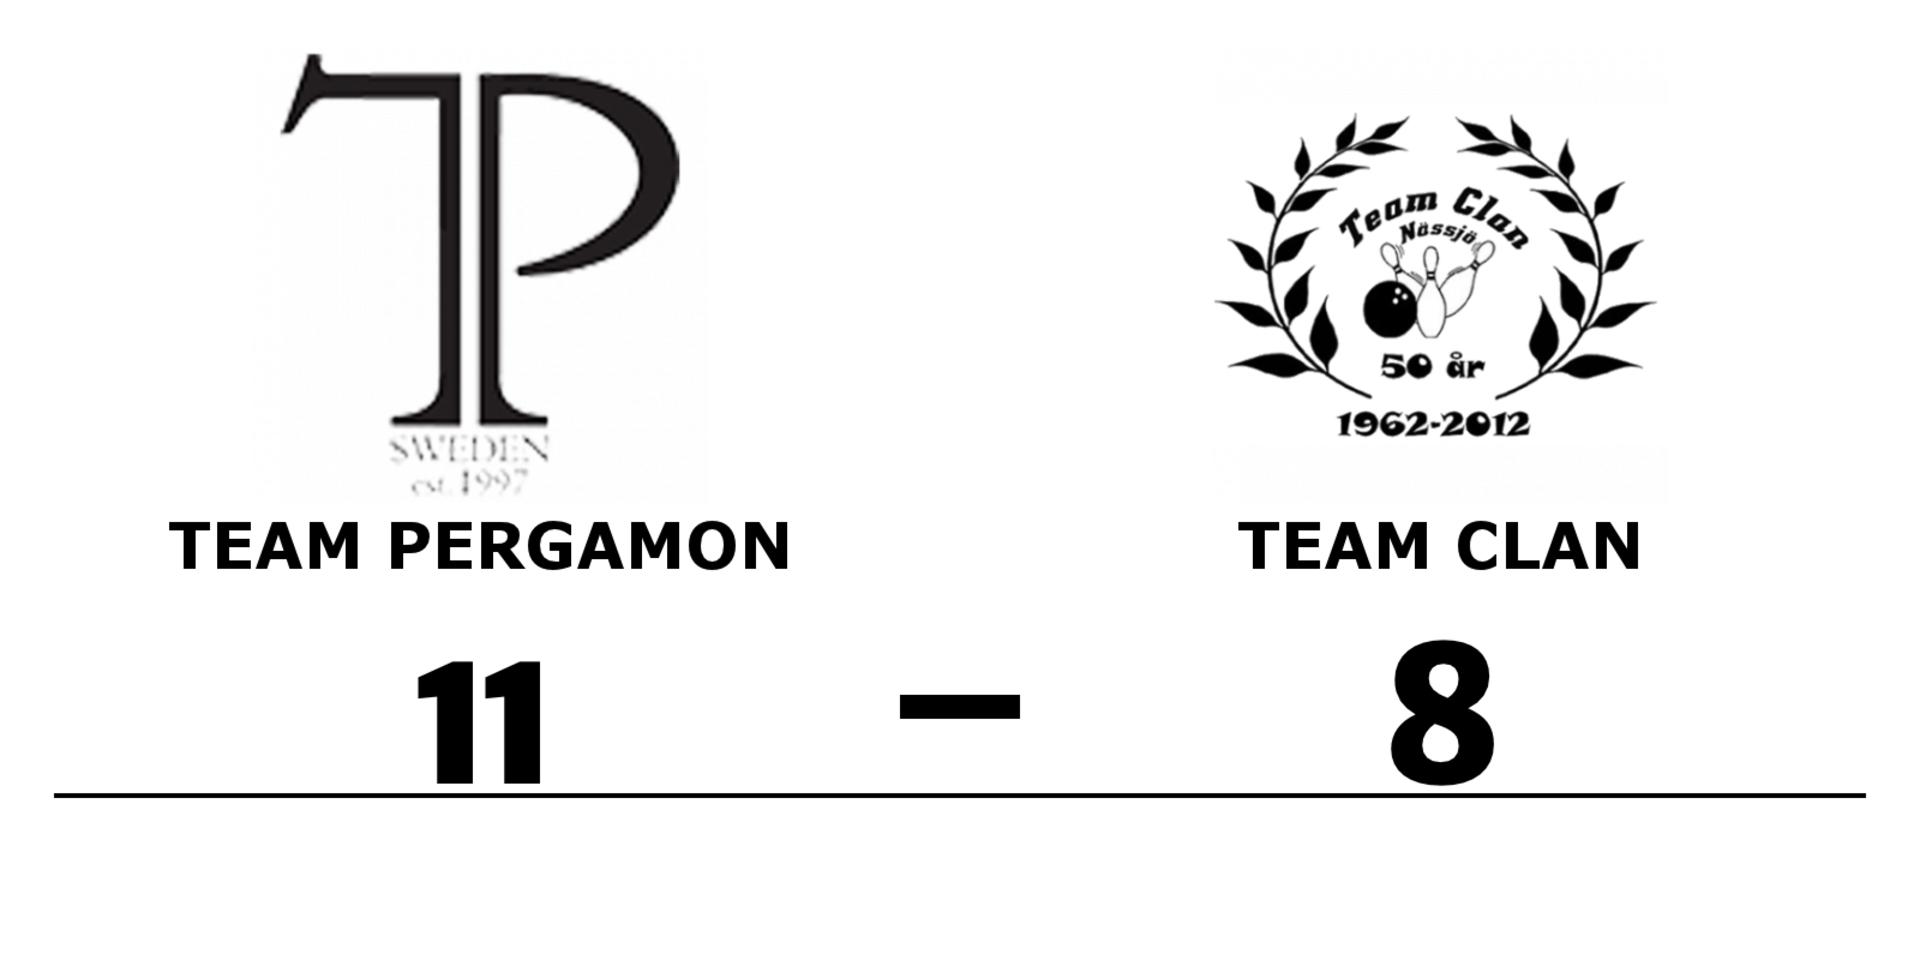 Team Pergamon BC vann mot Team Clan